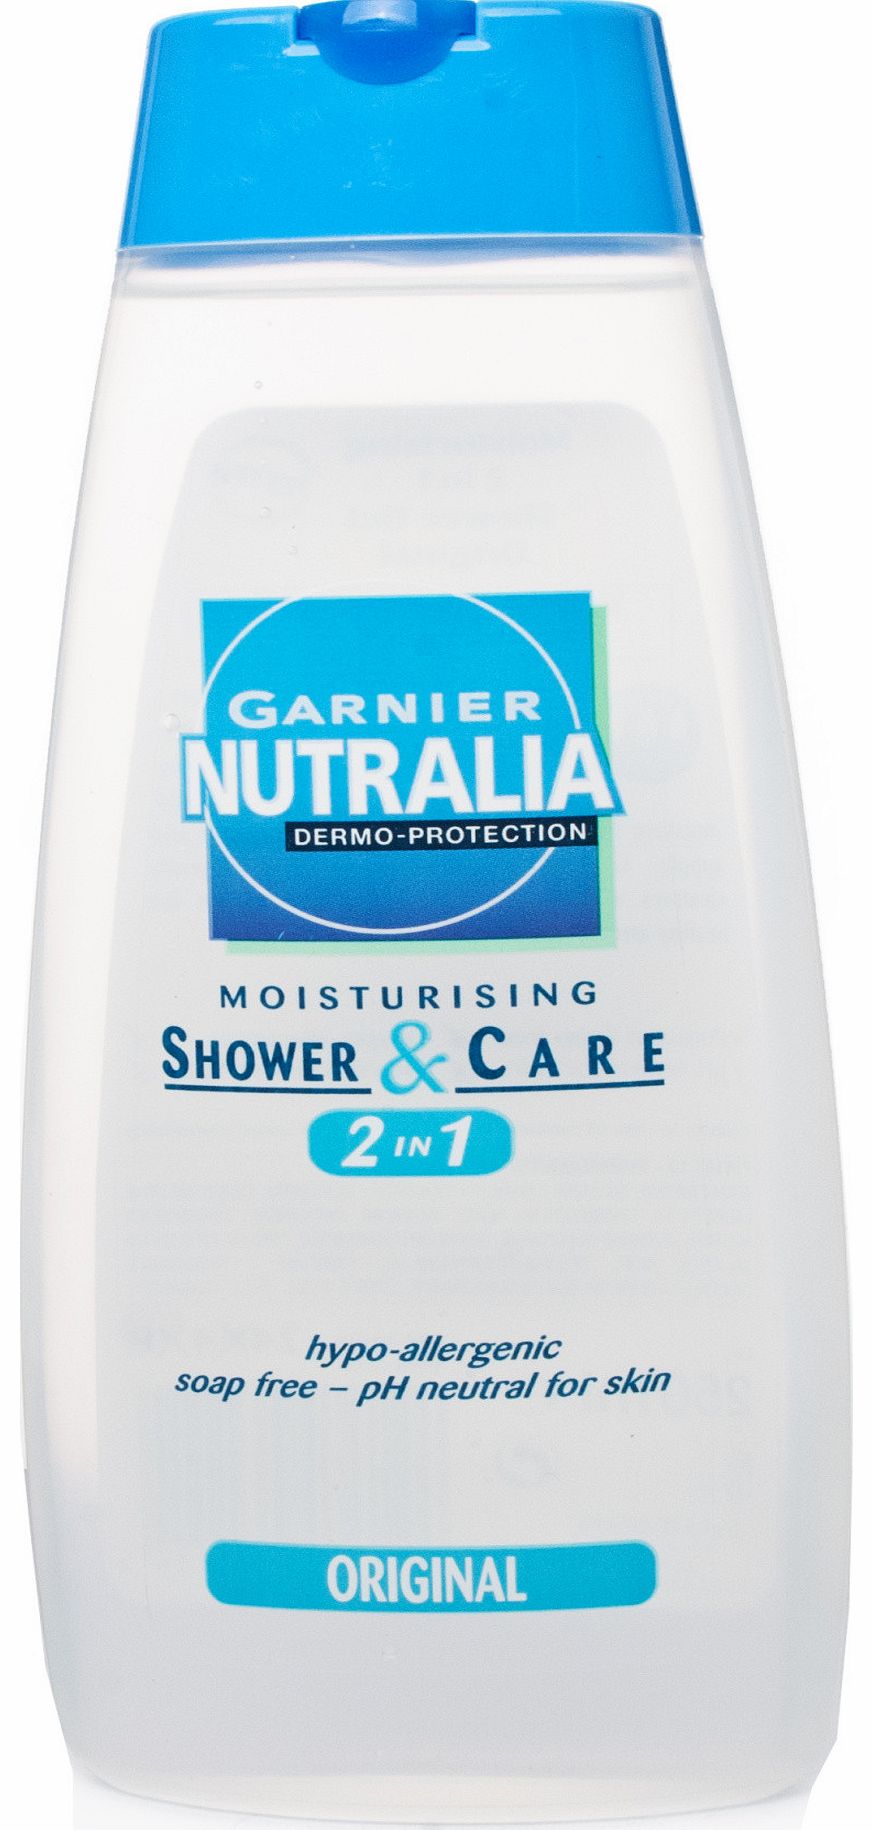 Garnier Nutralia Shower Gel Original